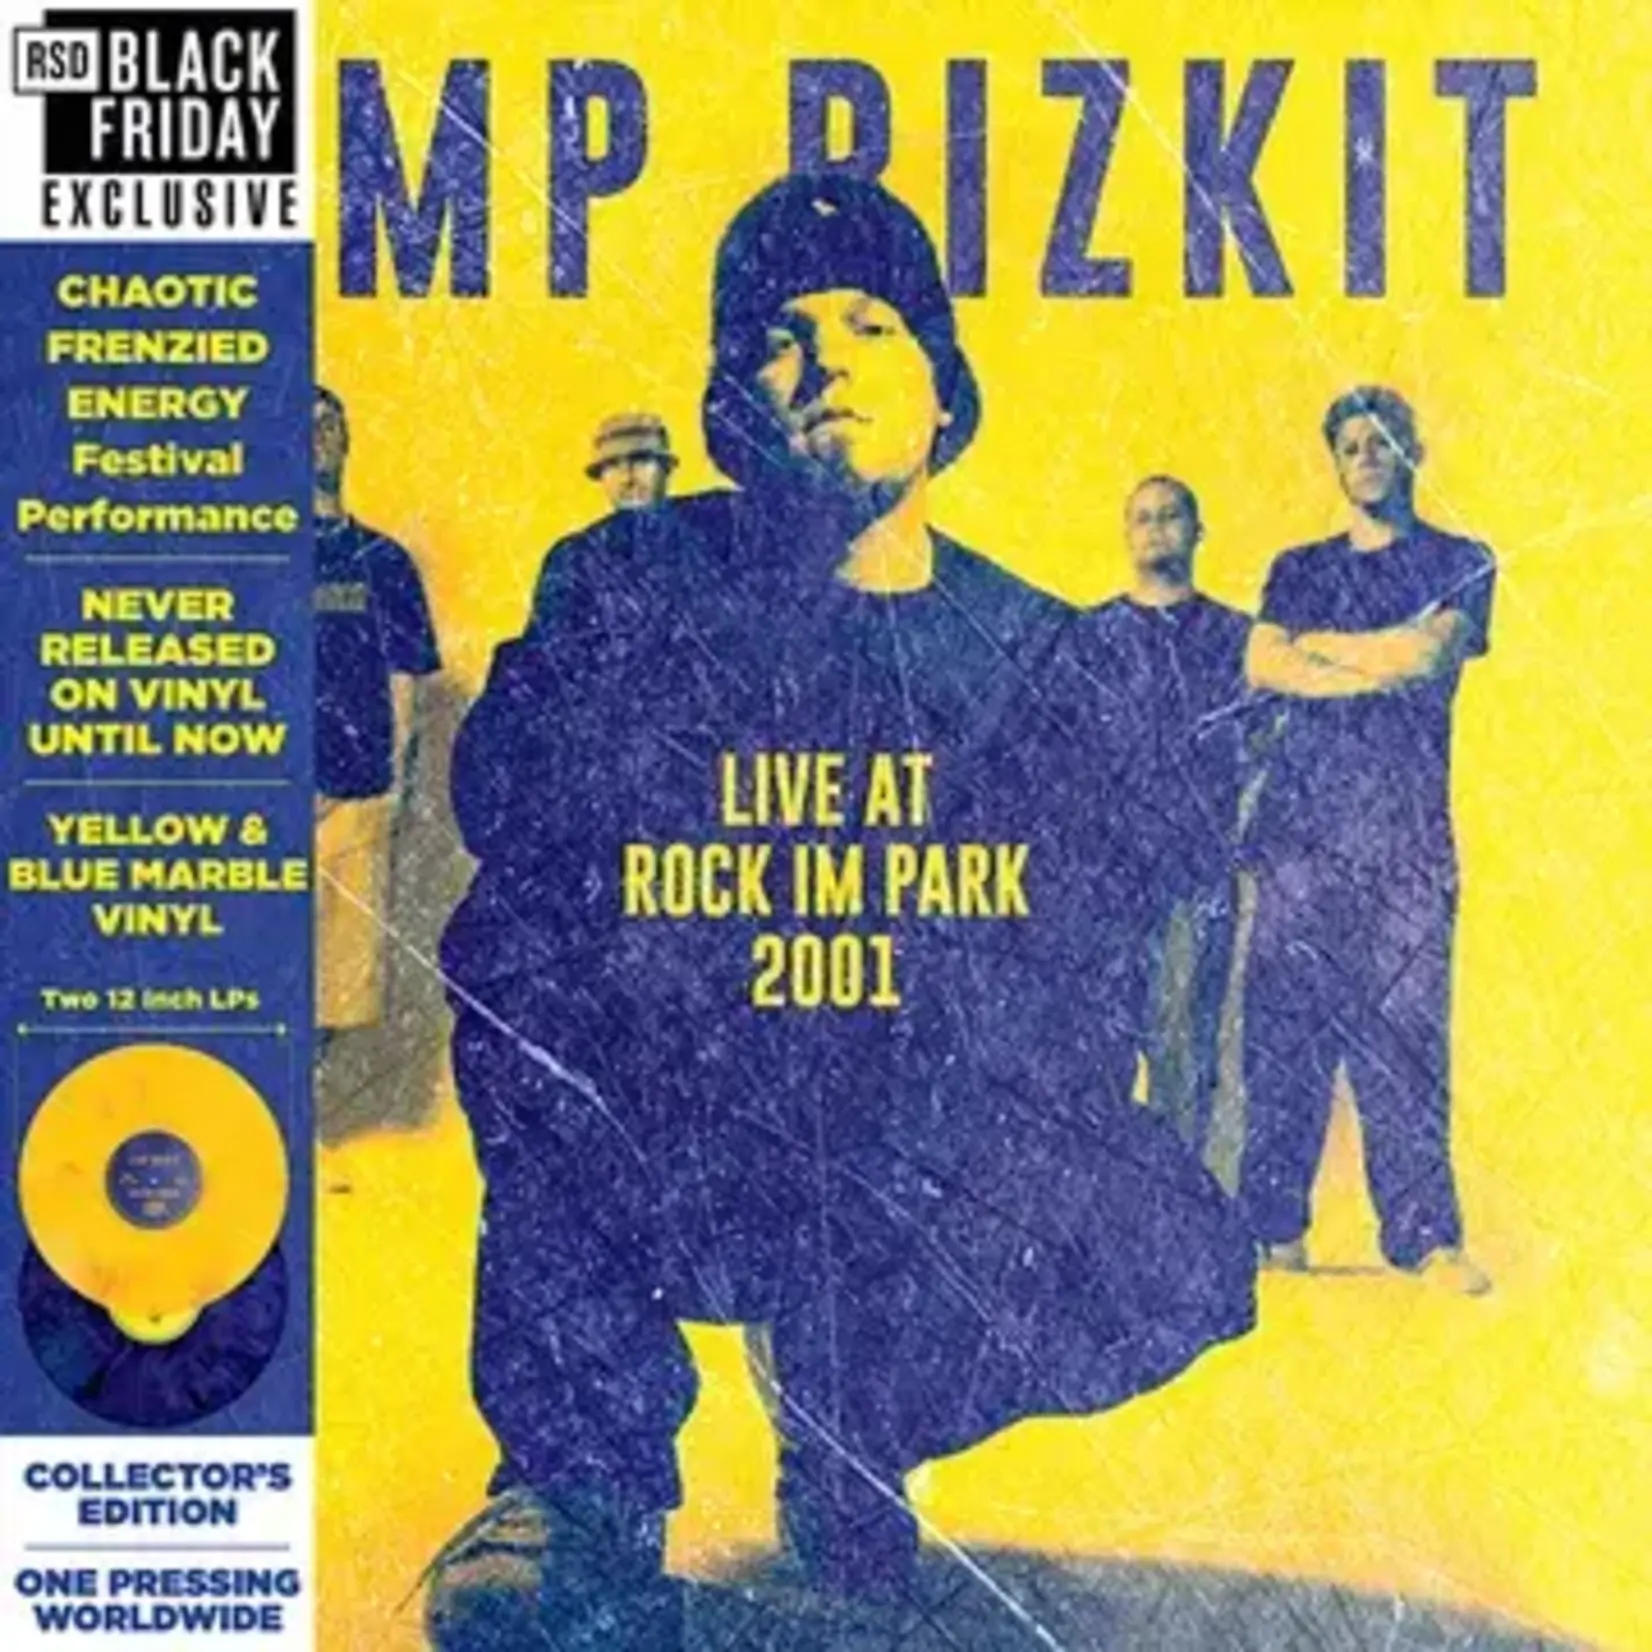 RSD Black Friday Limp Bizkit - Rock im Park 2001 (2LP) [Yellow/Blue]